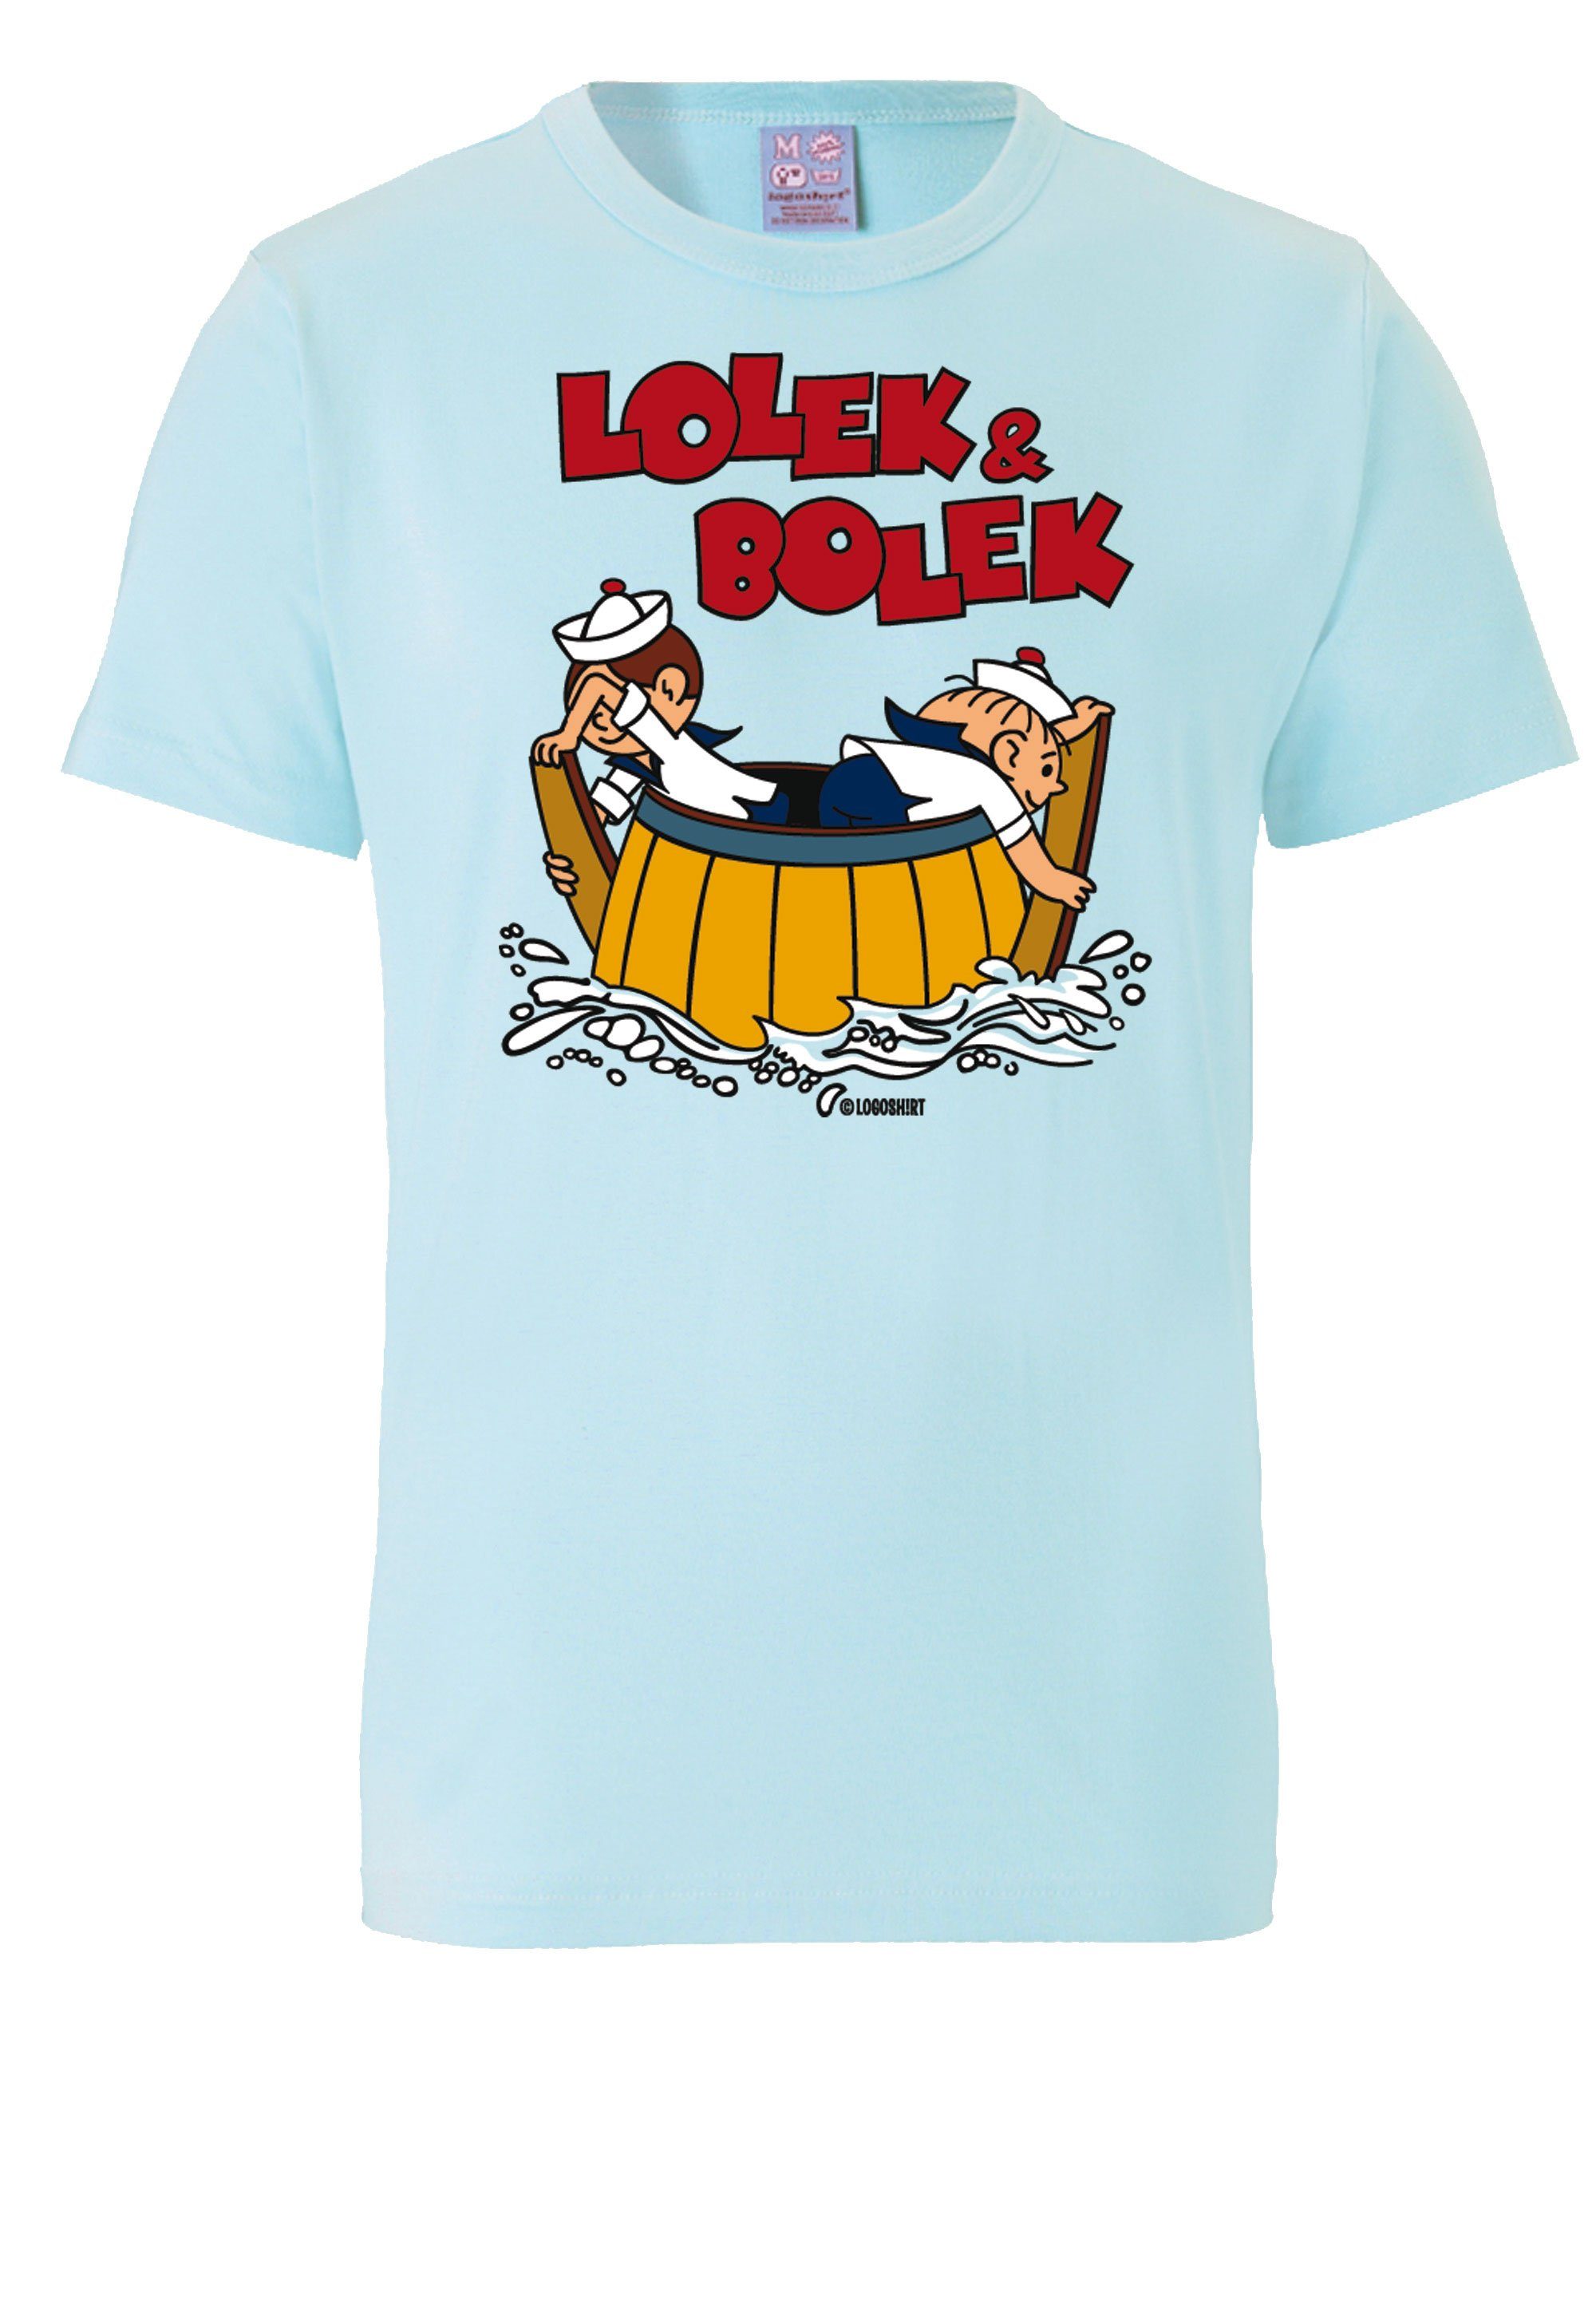 LOGOSHIRT T-Shirt Lolek Comic-Print Auf hoher See – & Bolek mit trendigem